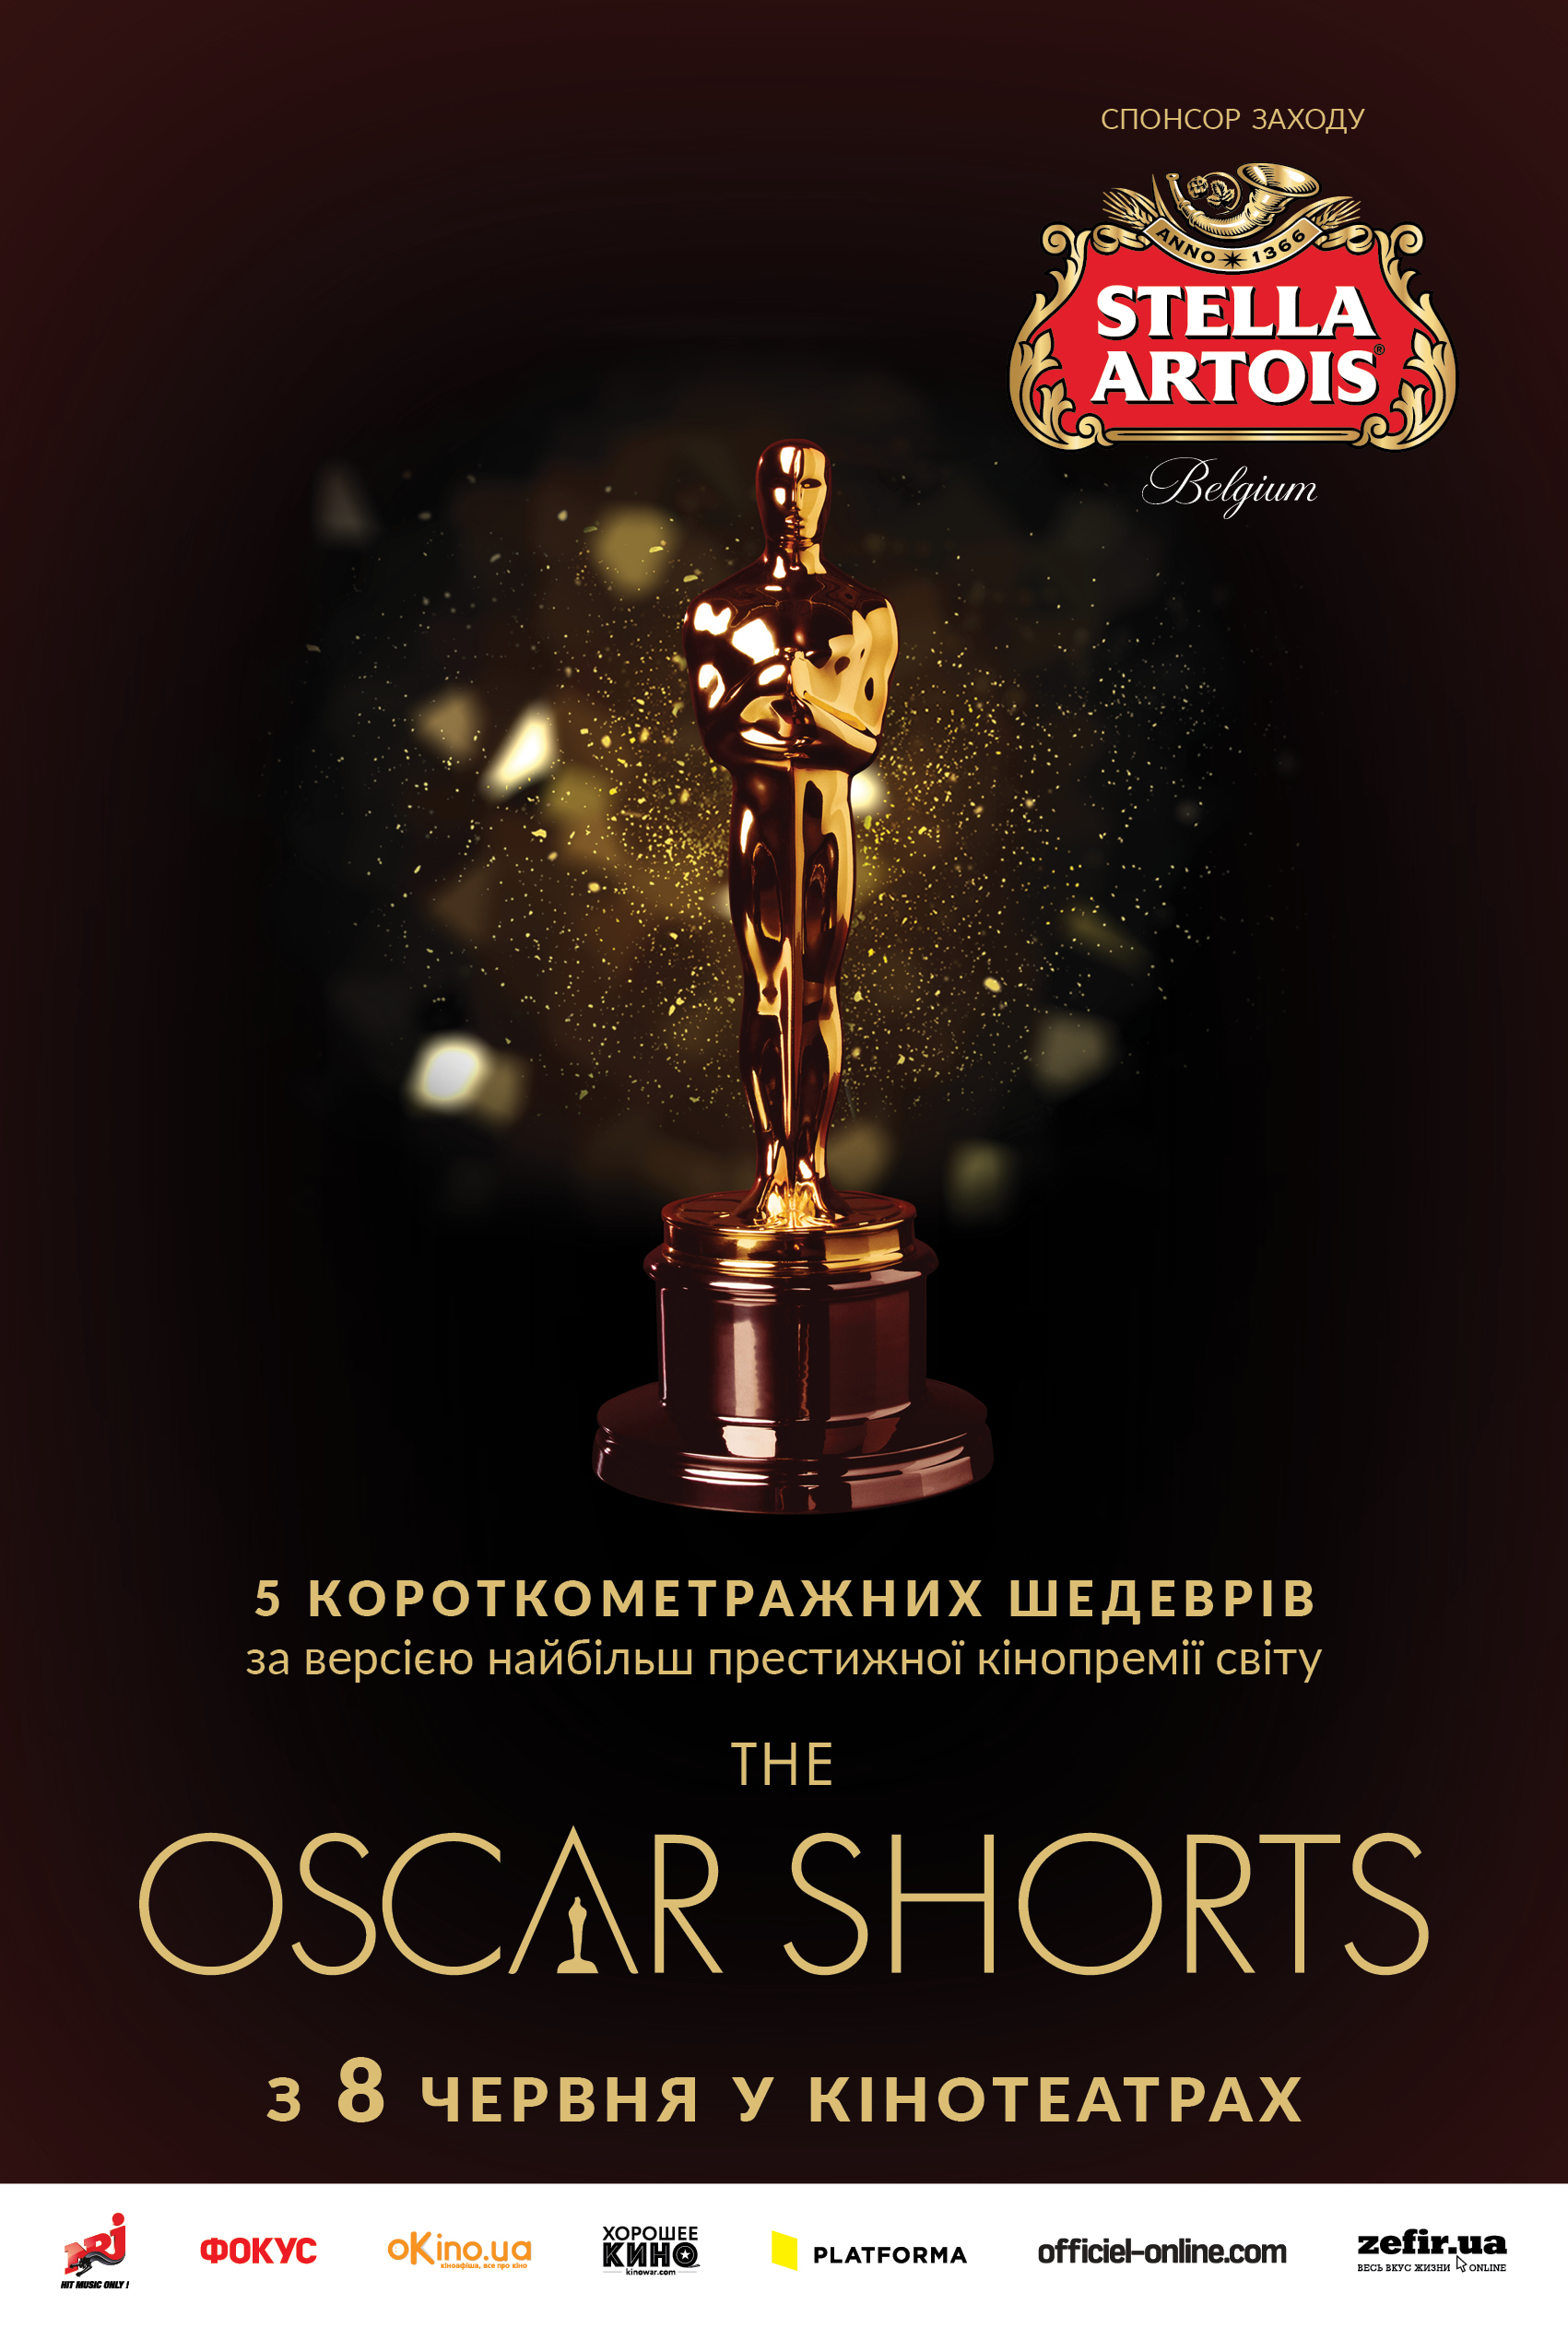 Постер фестиваля Оскар шортс